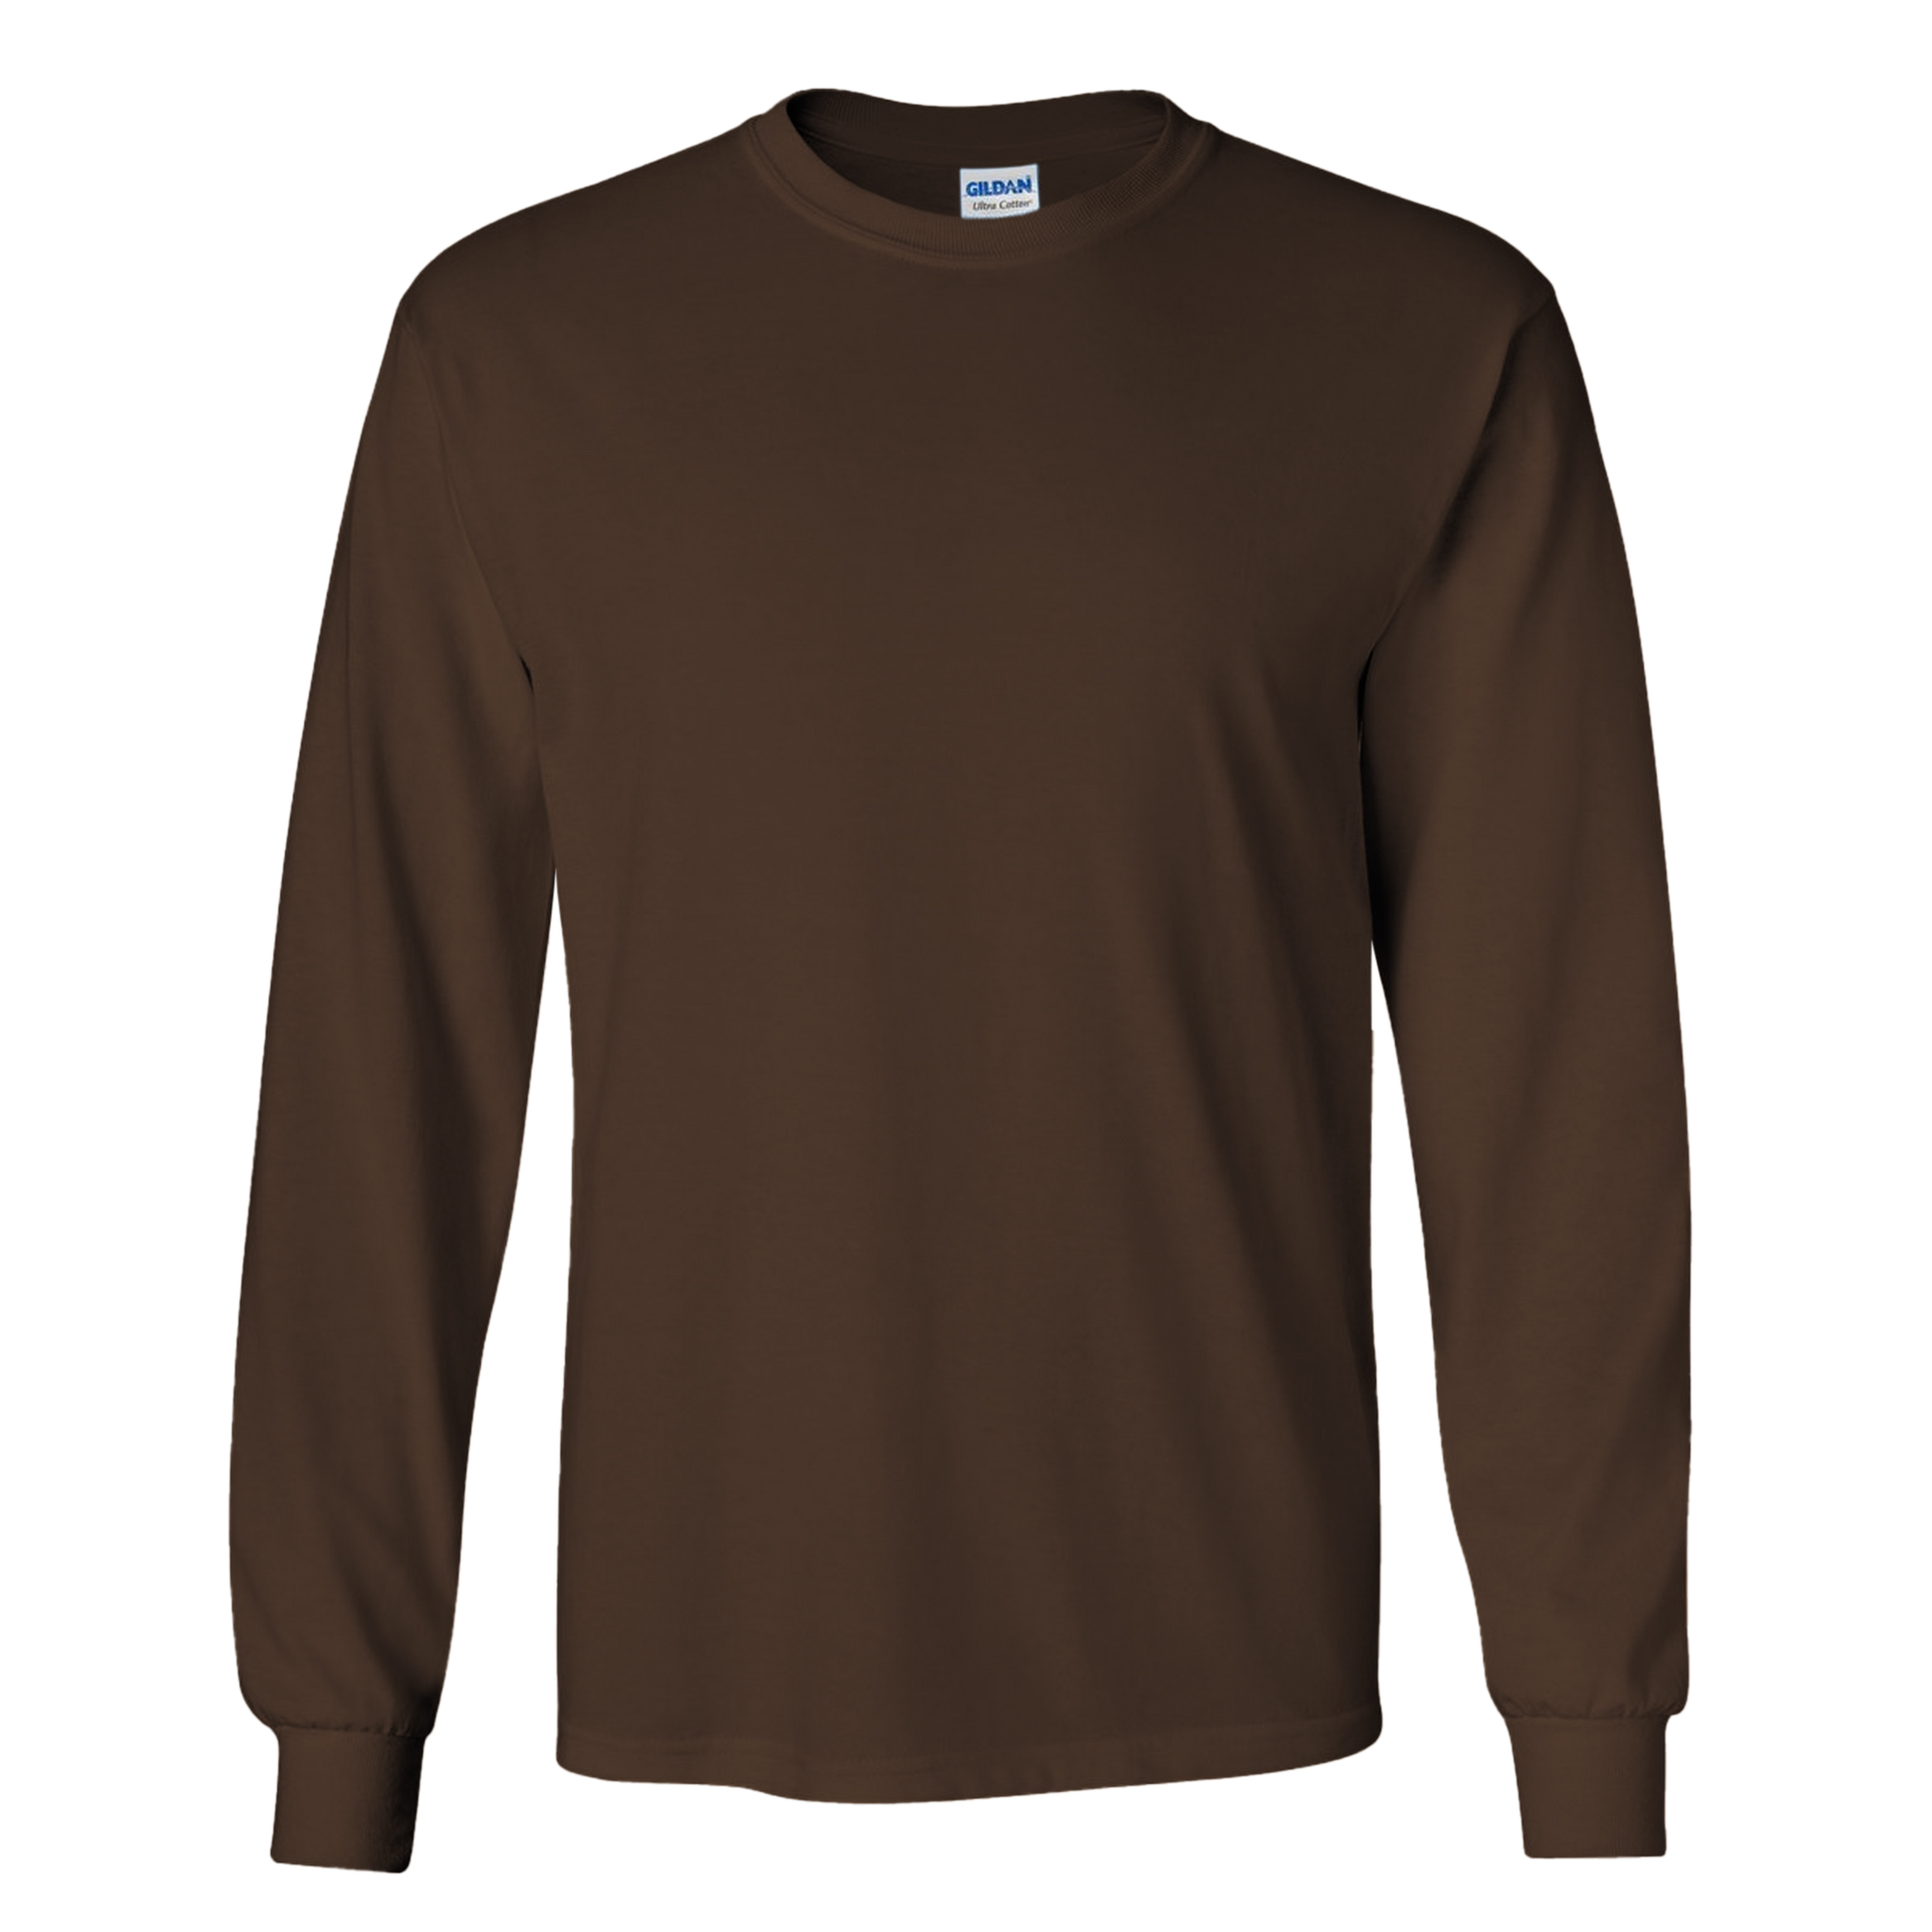 Gildan Mens Plain Crew Neck Ultra Cotton Long Sleeve T-Shirt - image 1 of 2